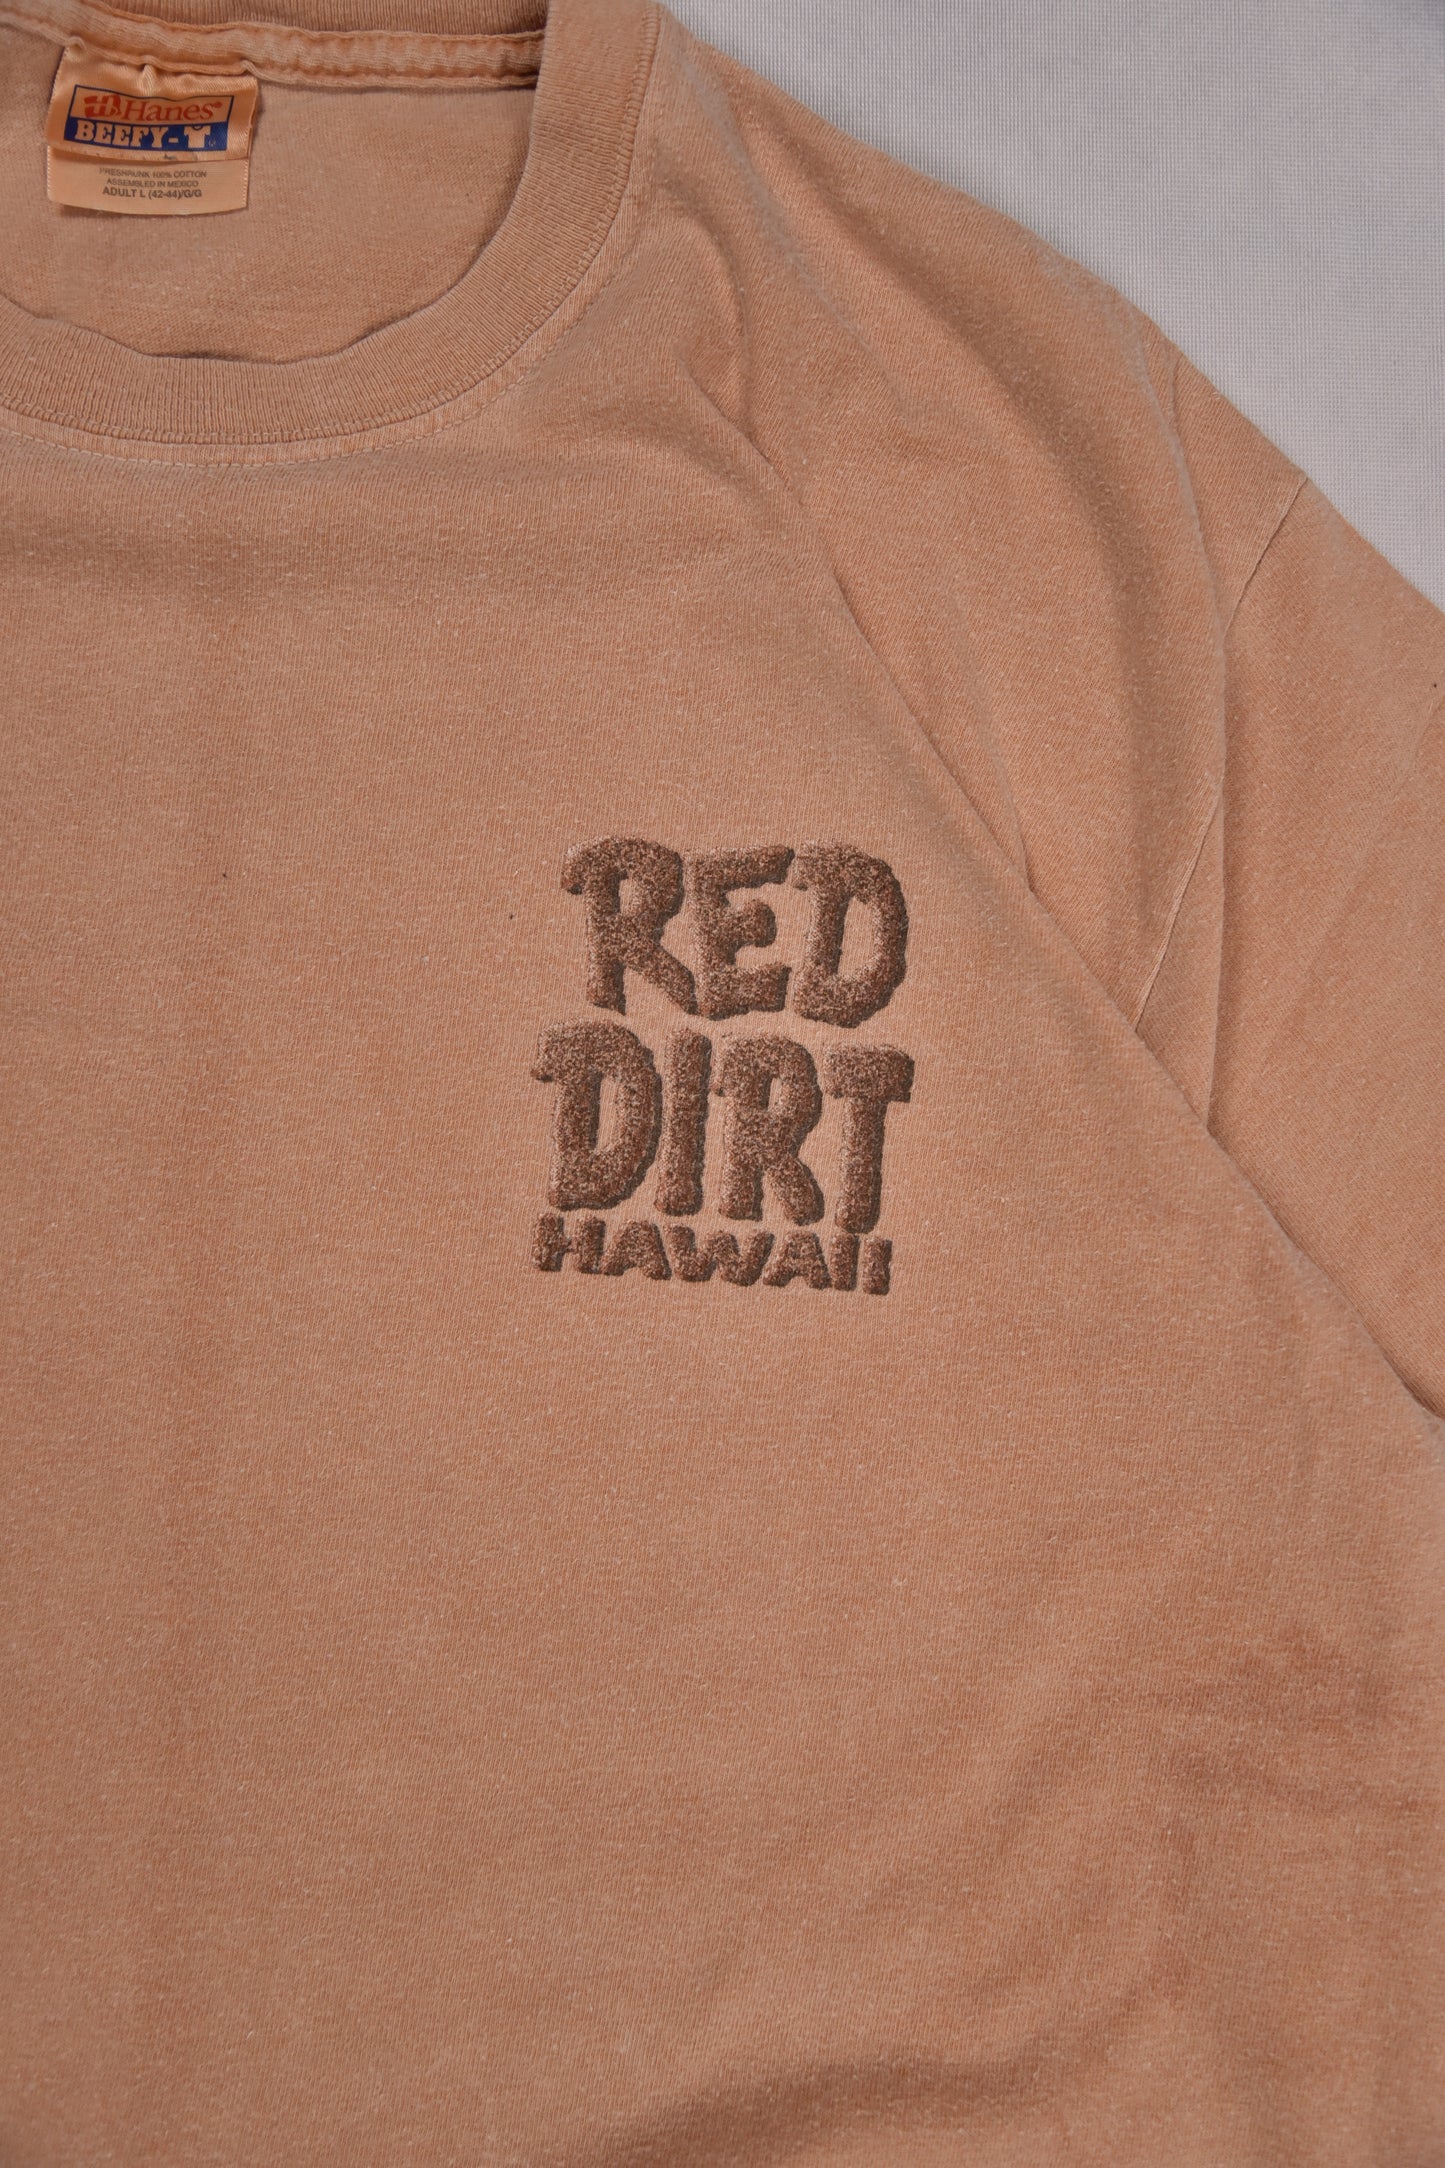 Vintage "RED DIRT" T-Shirt / L